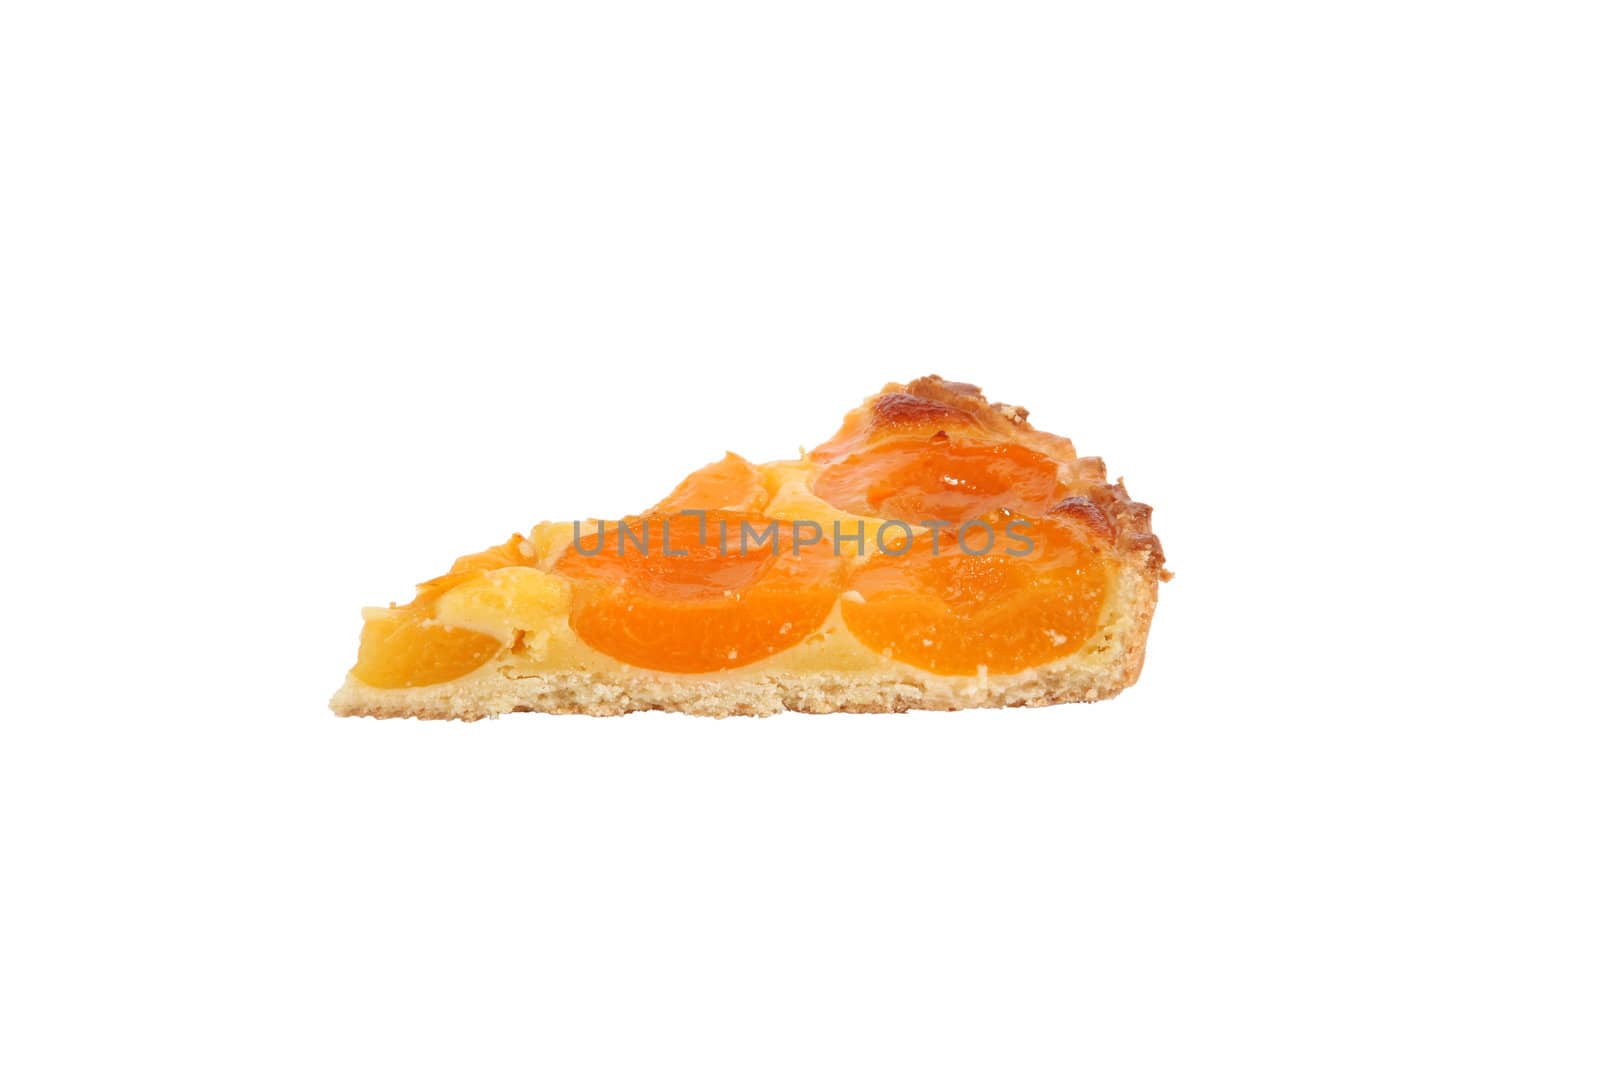 A slice of Mirabelle tart by phovoir